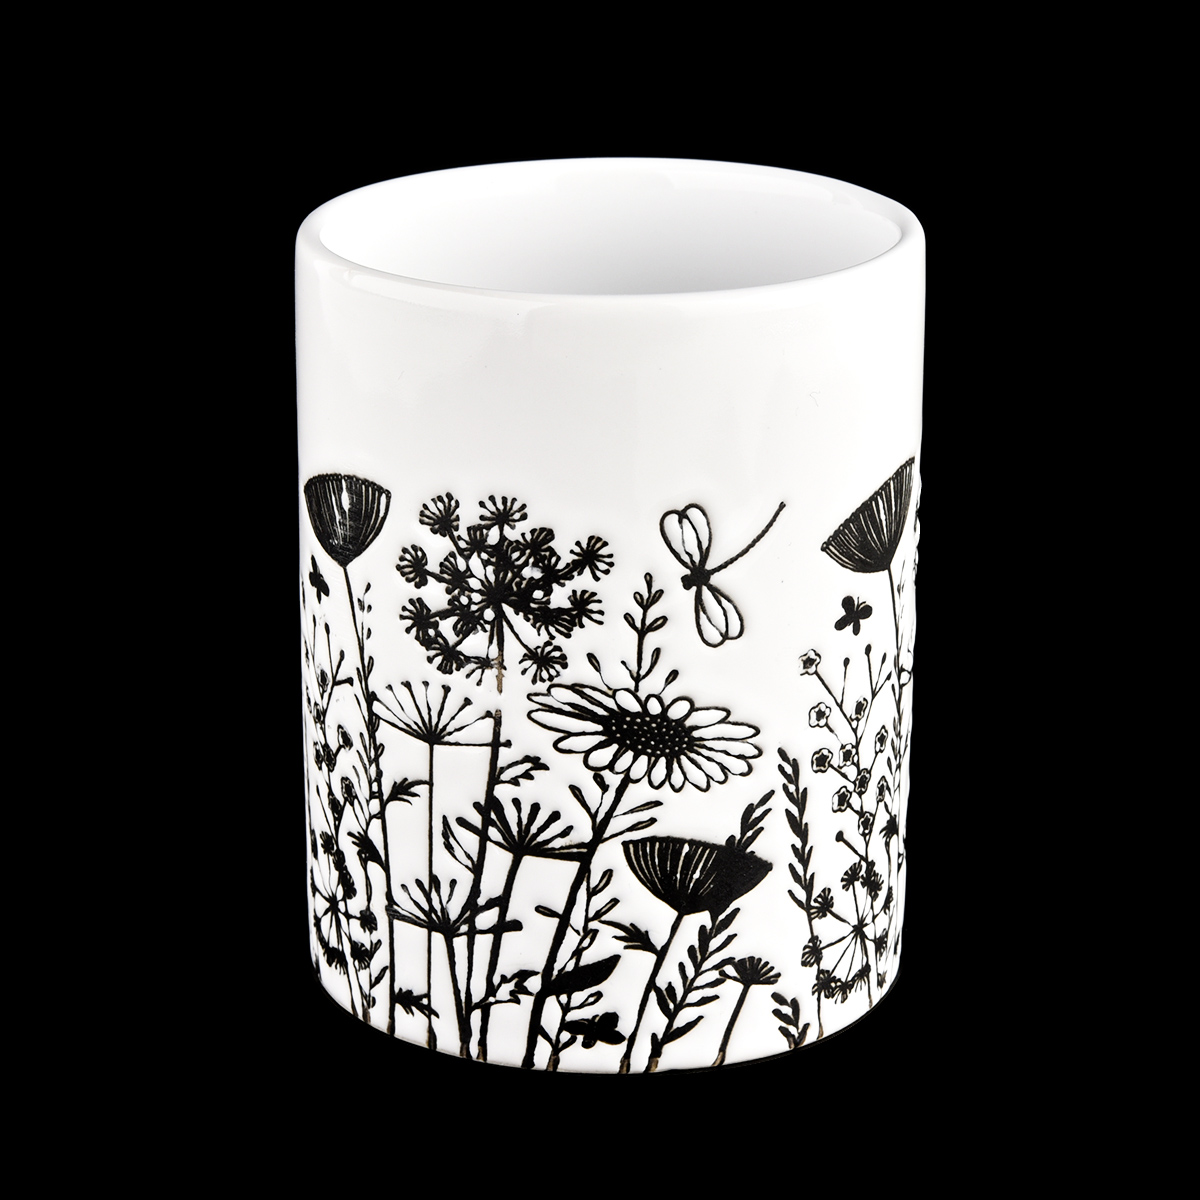 12 oz white ceramic vessel with decorative black print flower patterns